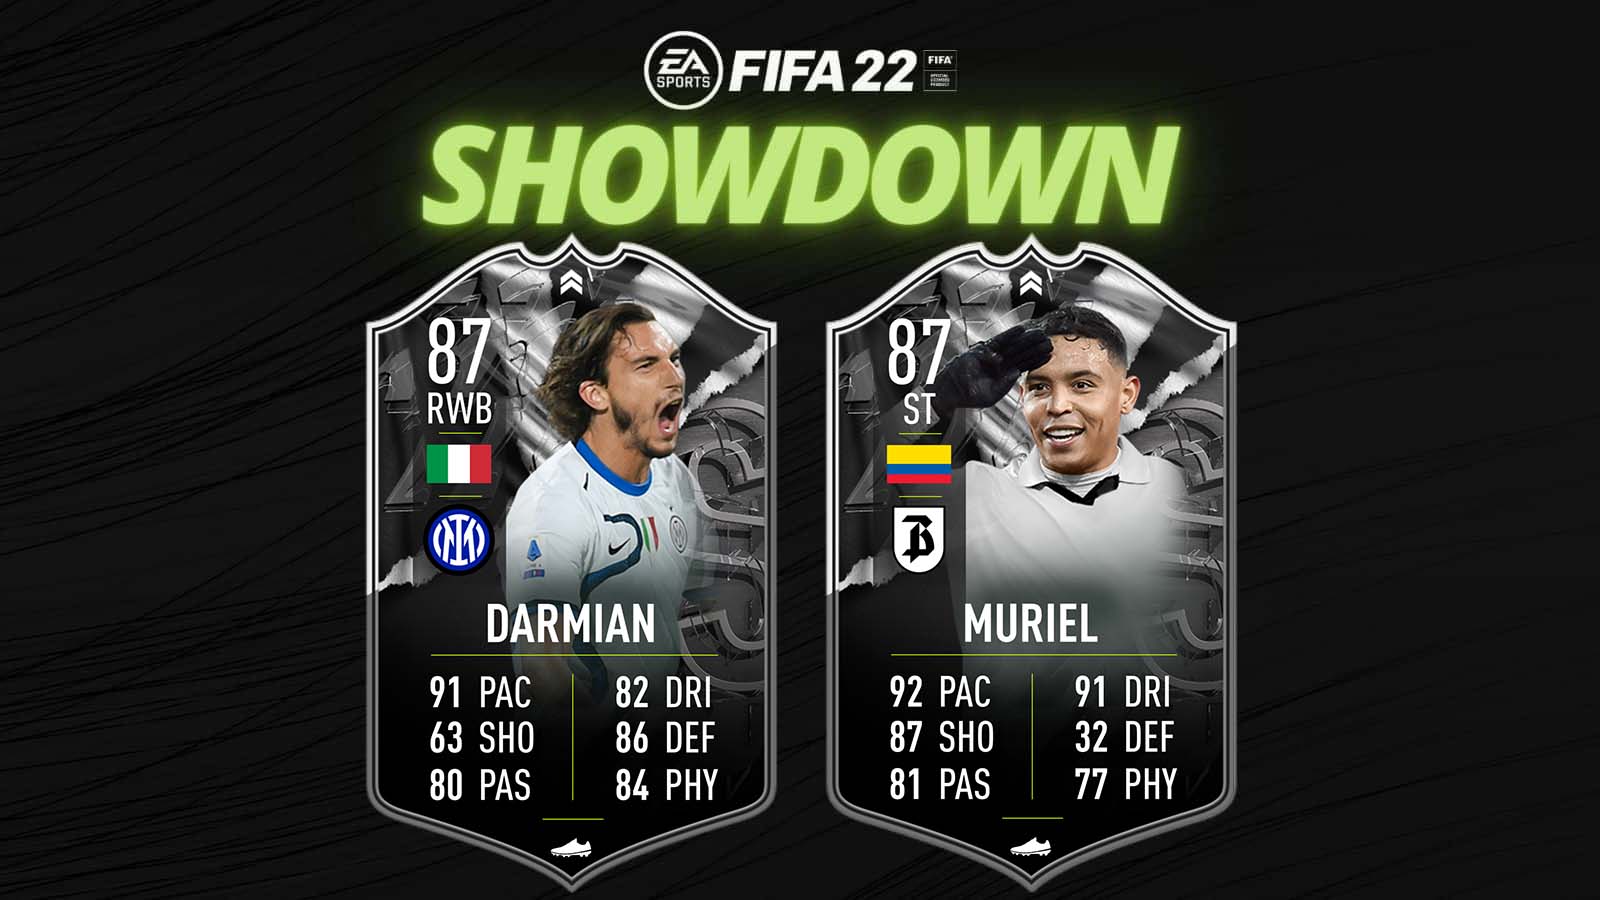 FIFA 22 Showdown Muriel and Darmian